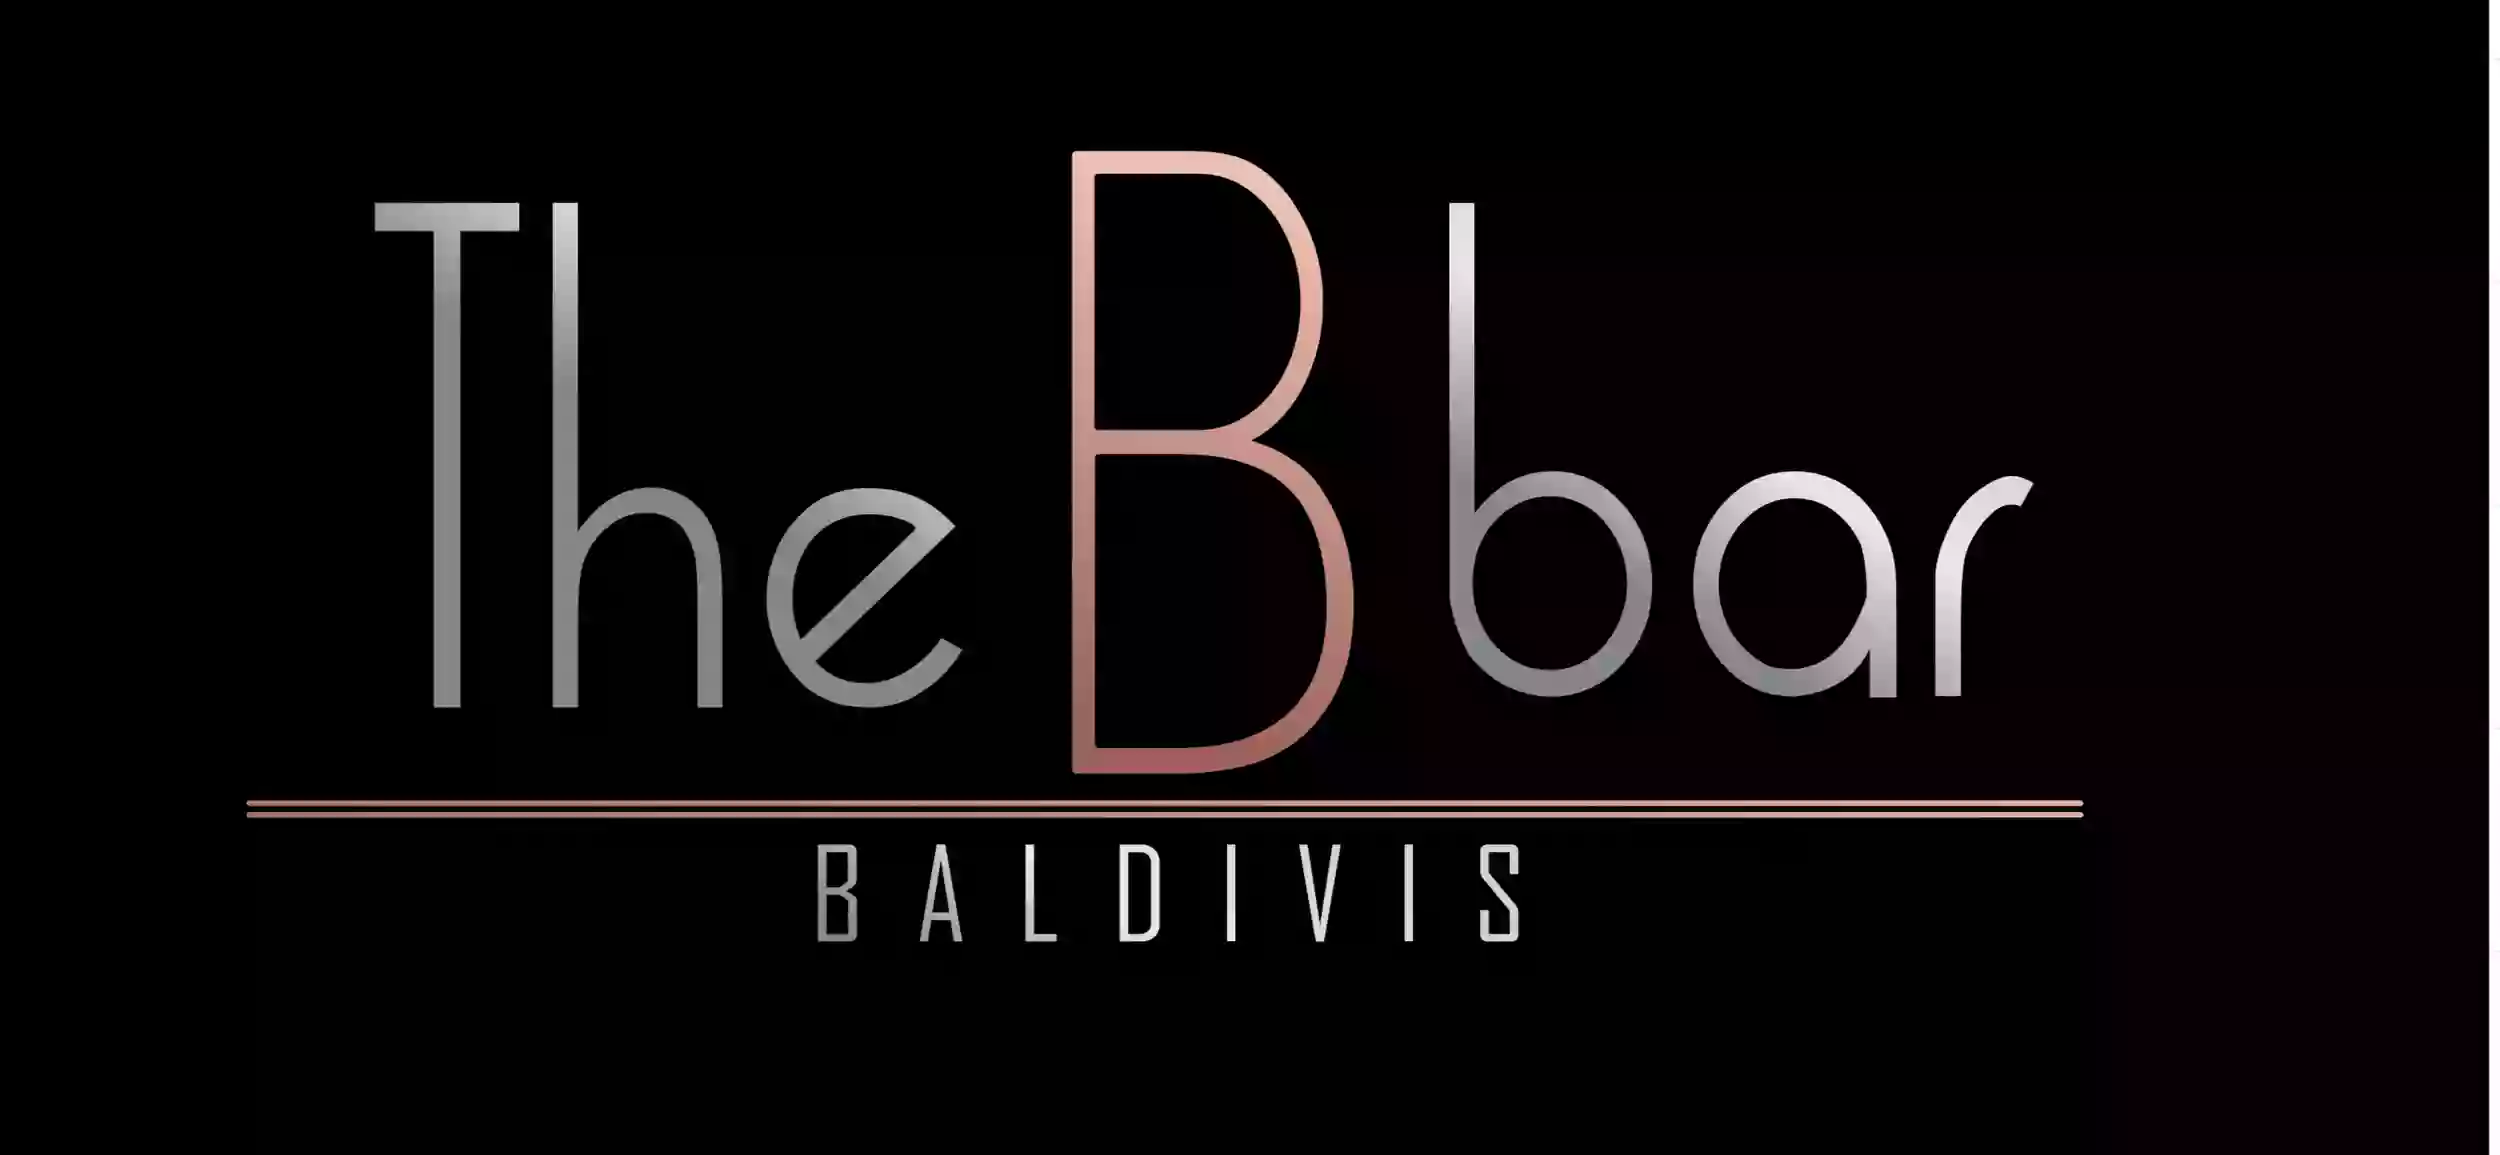 The Bbar Baldivis